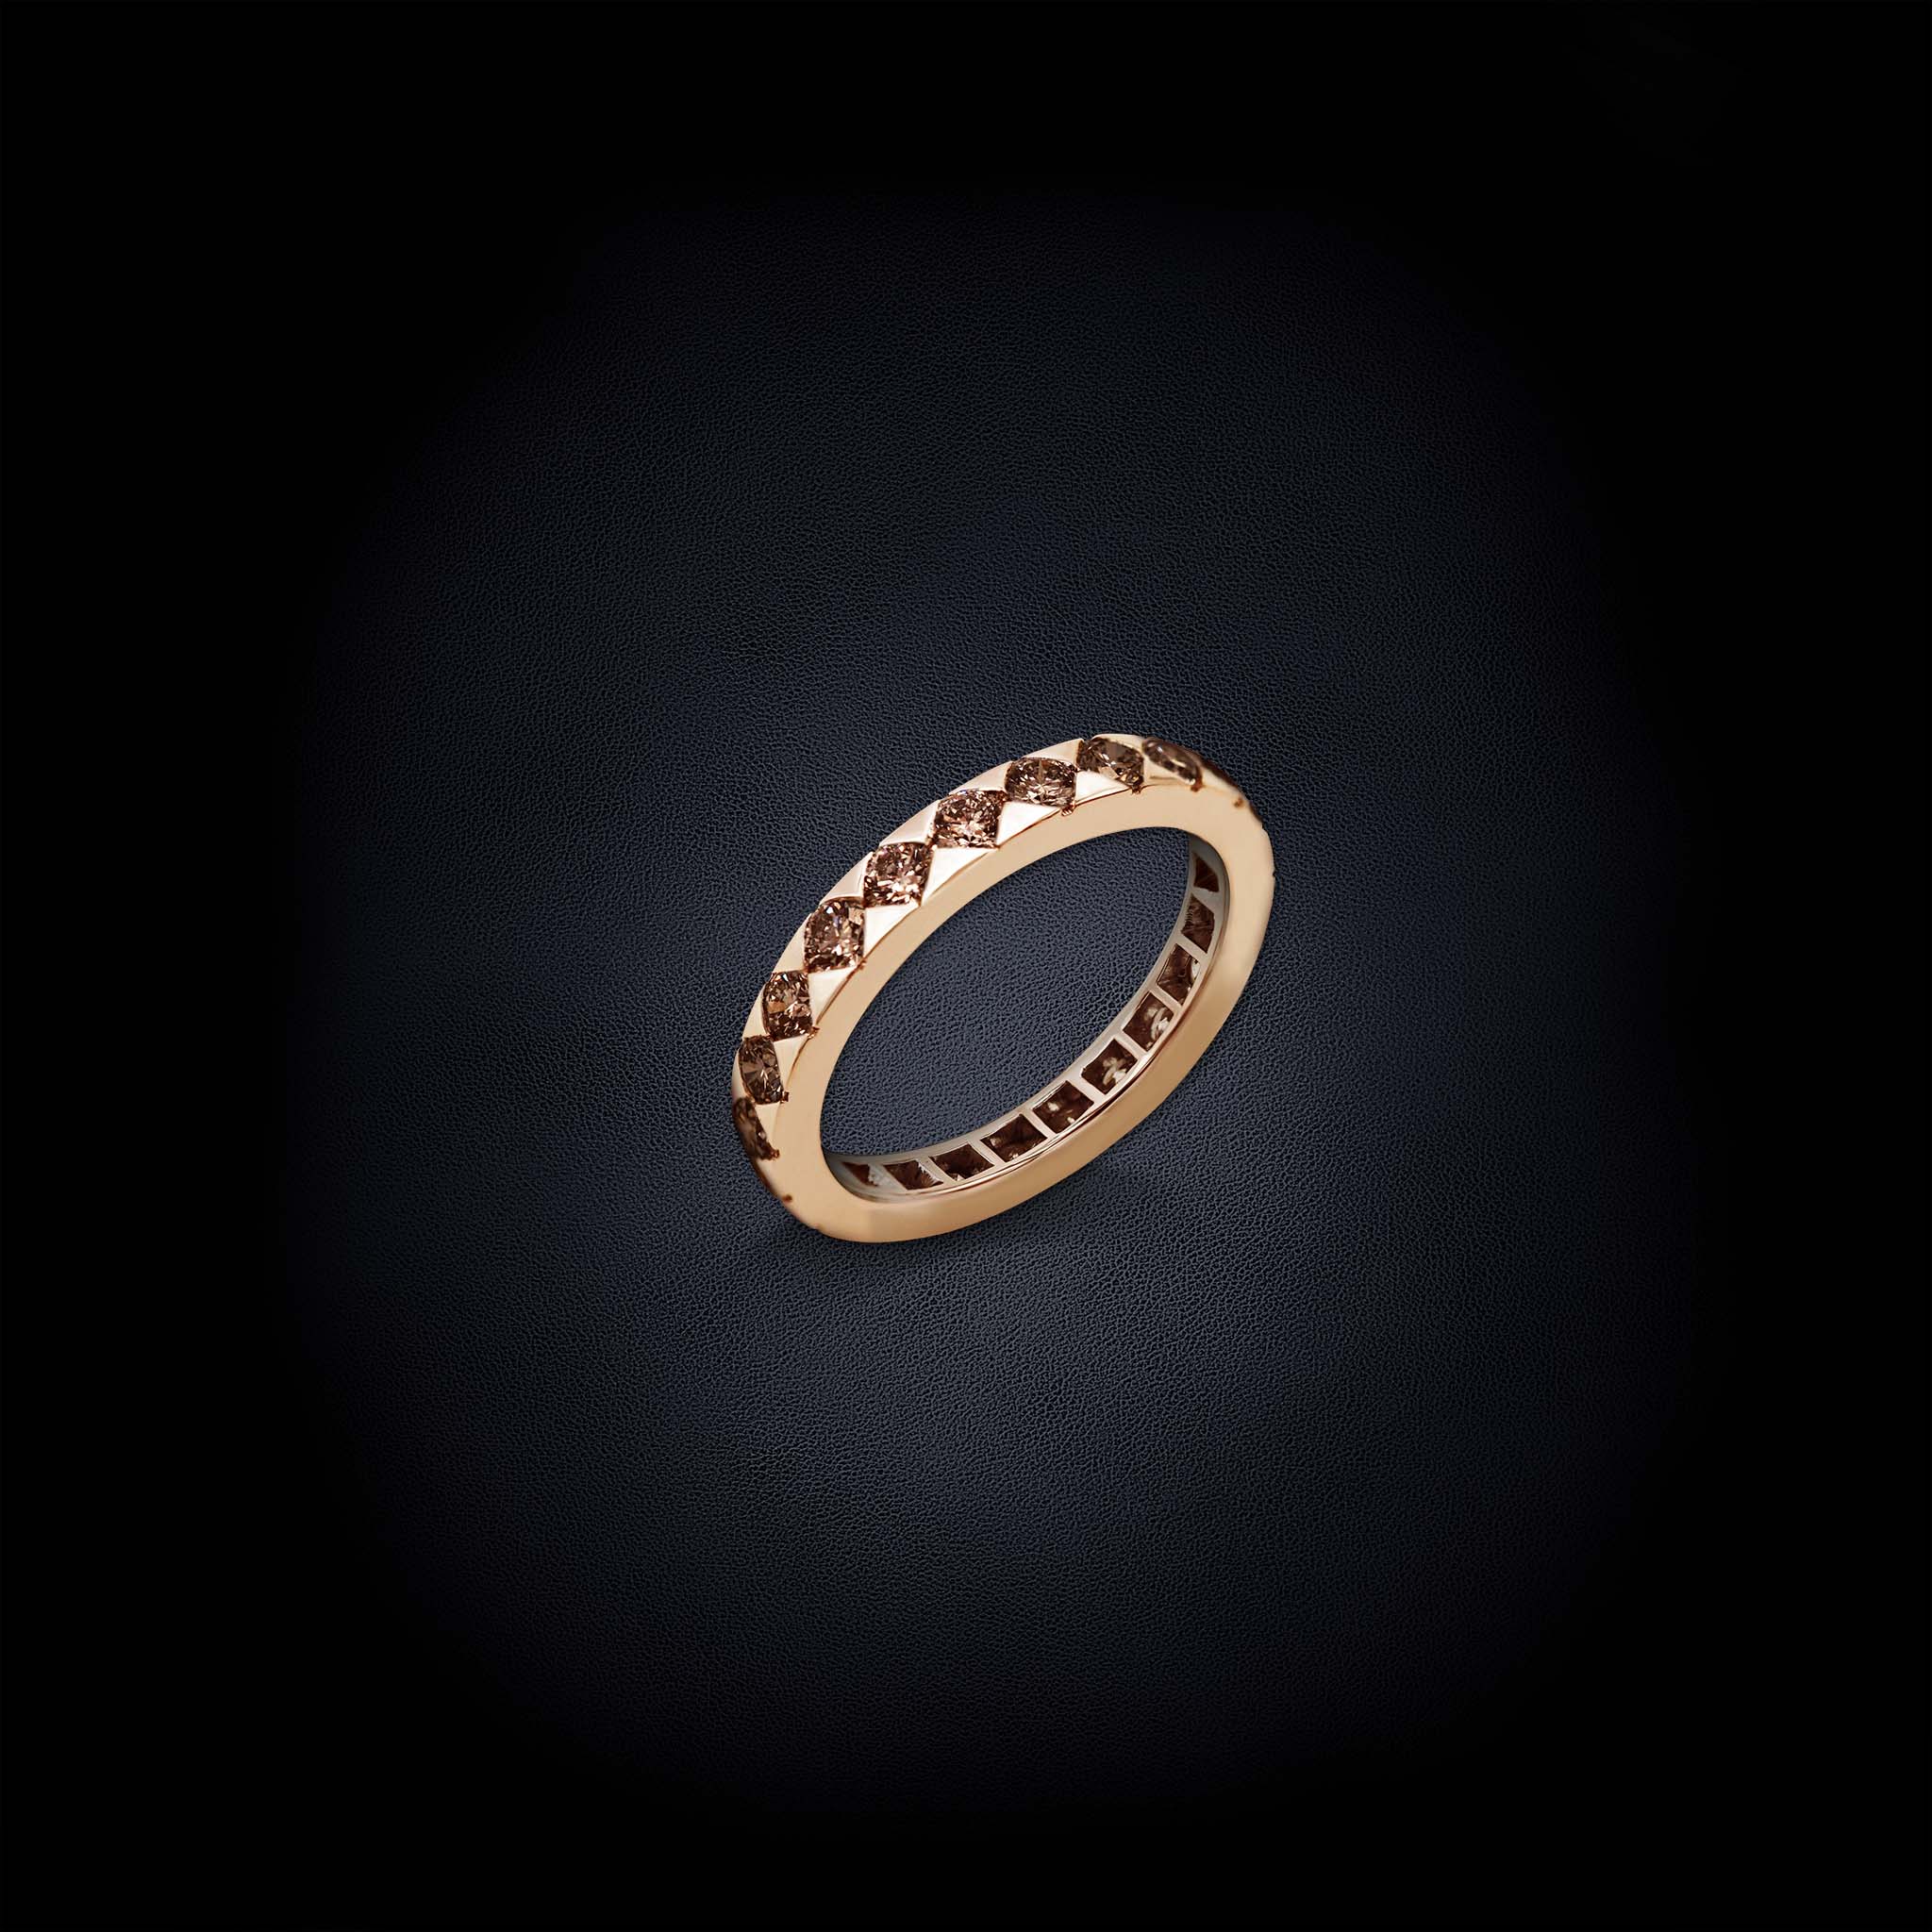 Wedding ring SIGNATURE pink gold brown diamonds